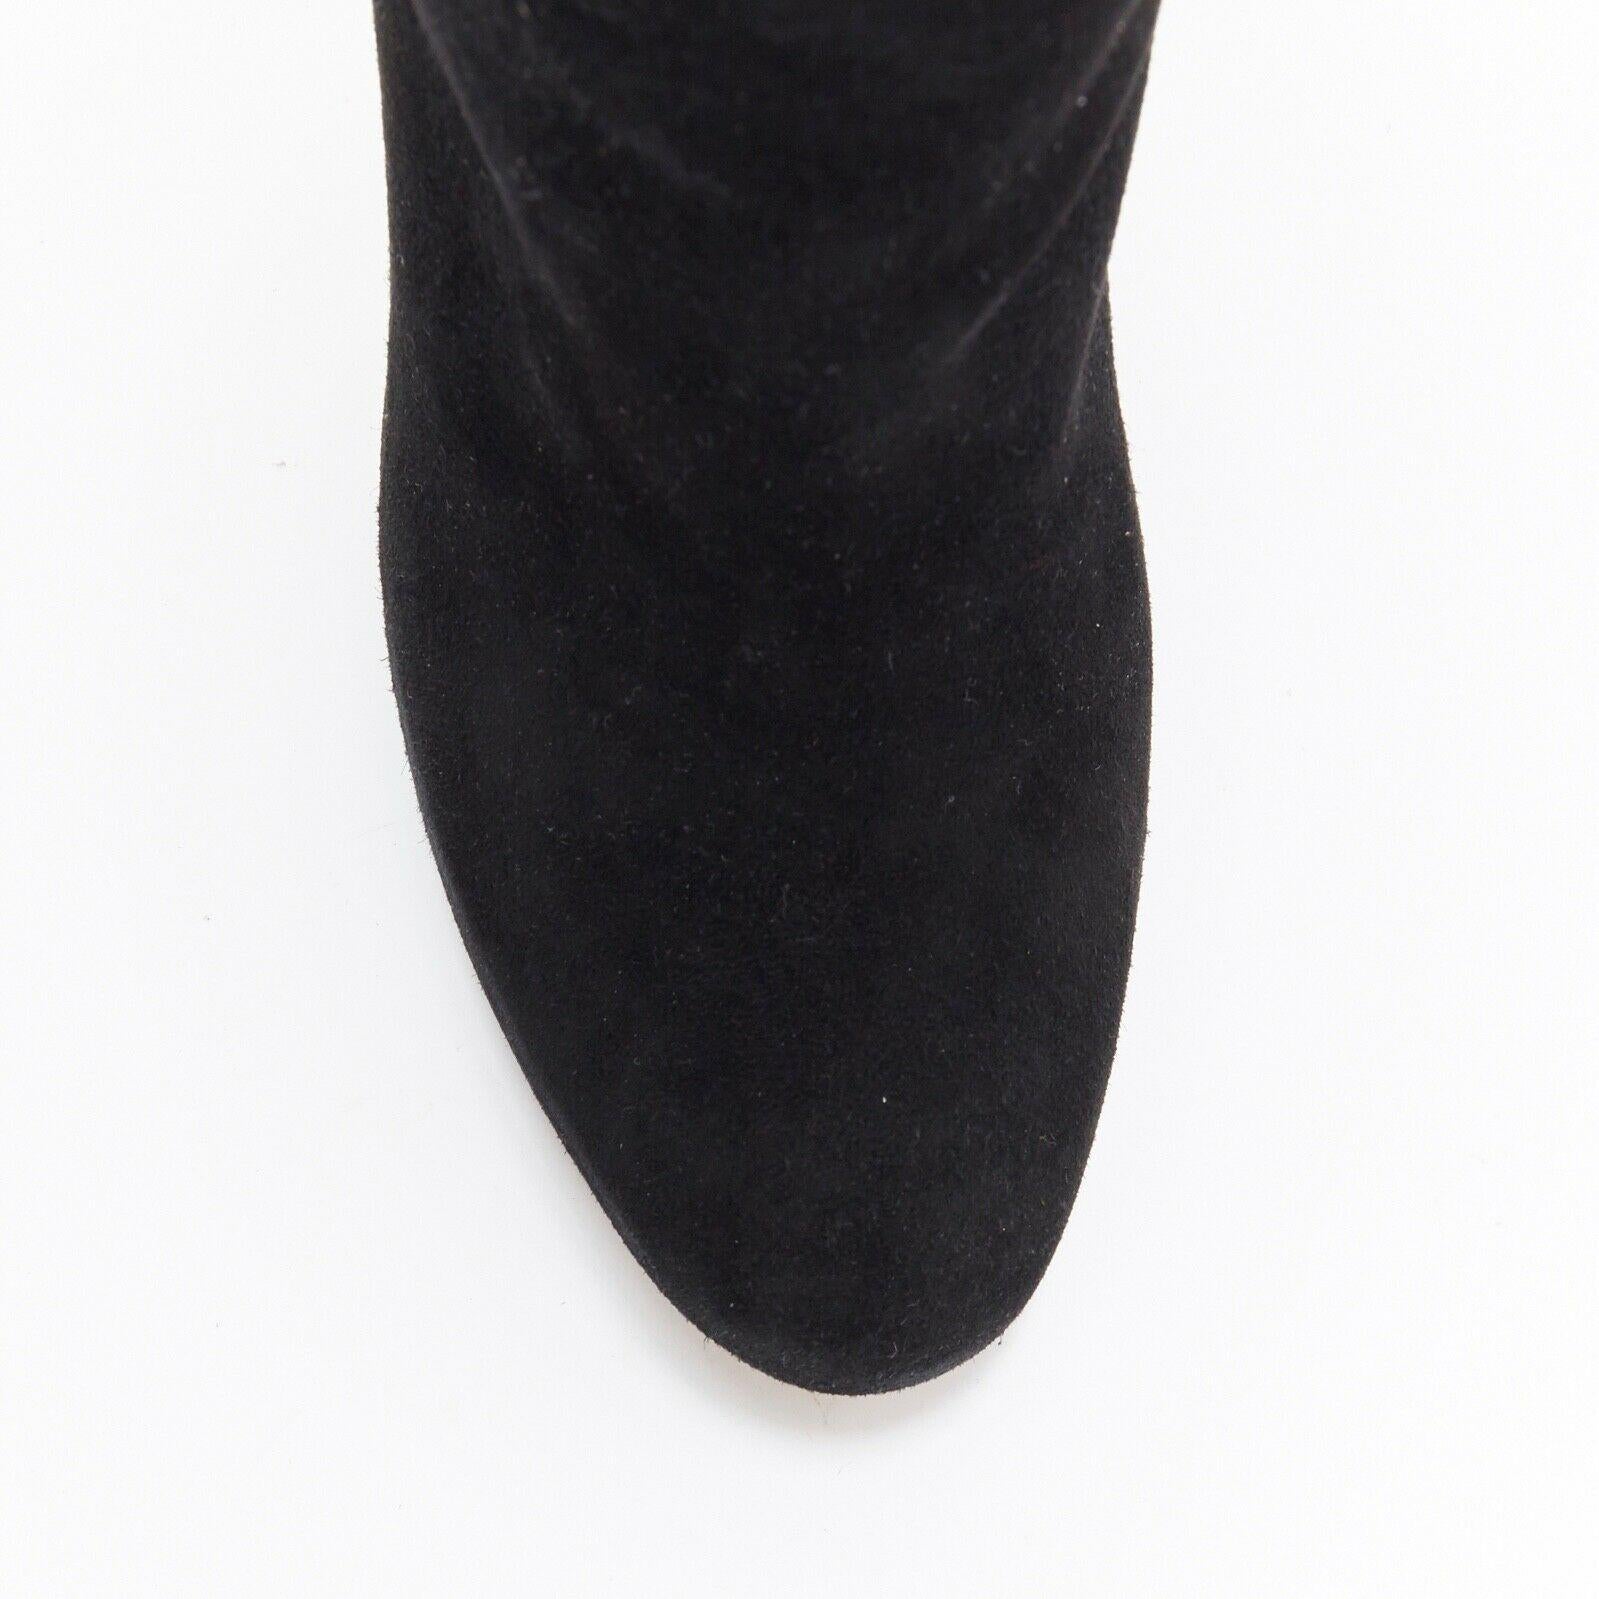 Black new JIMMY CHOO Bill black suede leather bohemian beaded fringe tall boots EU35.5